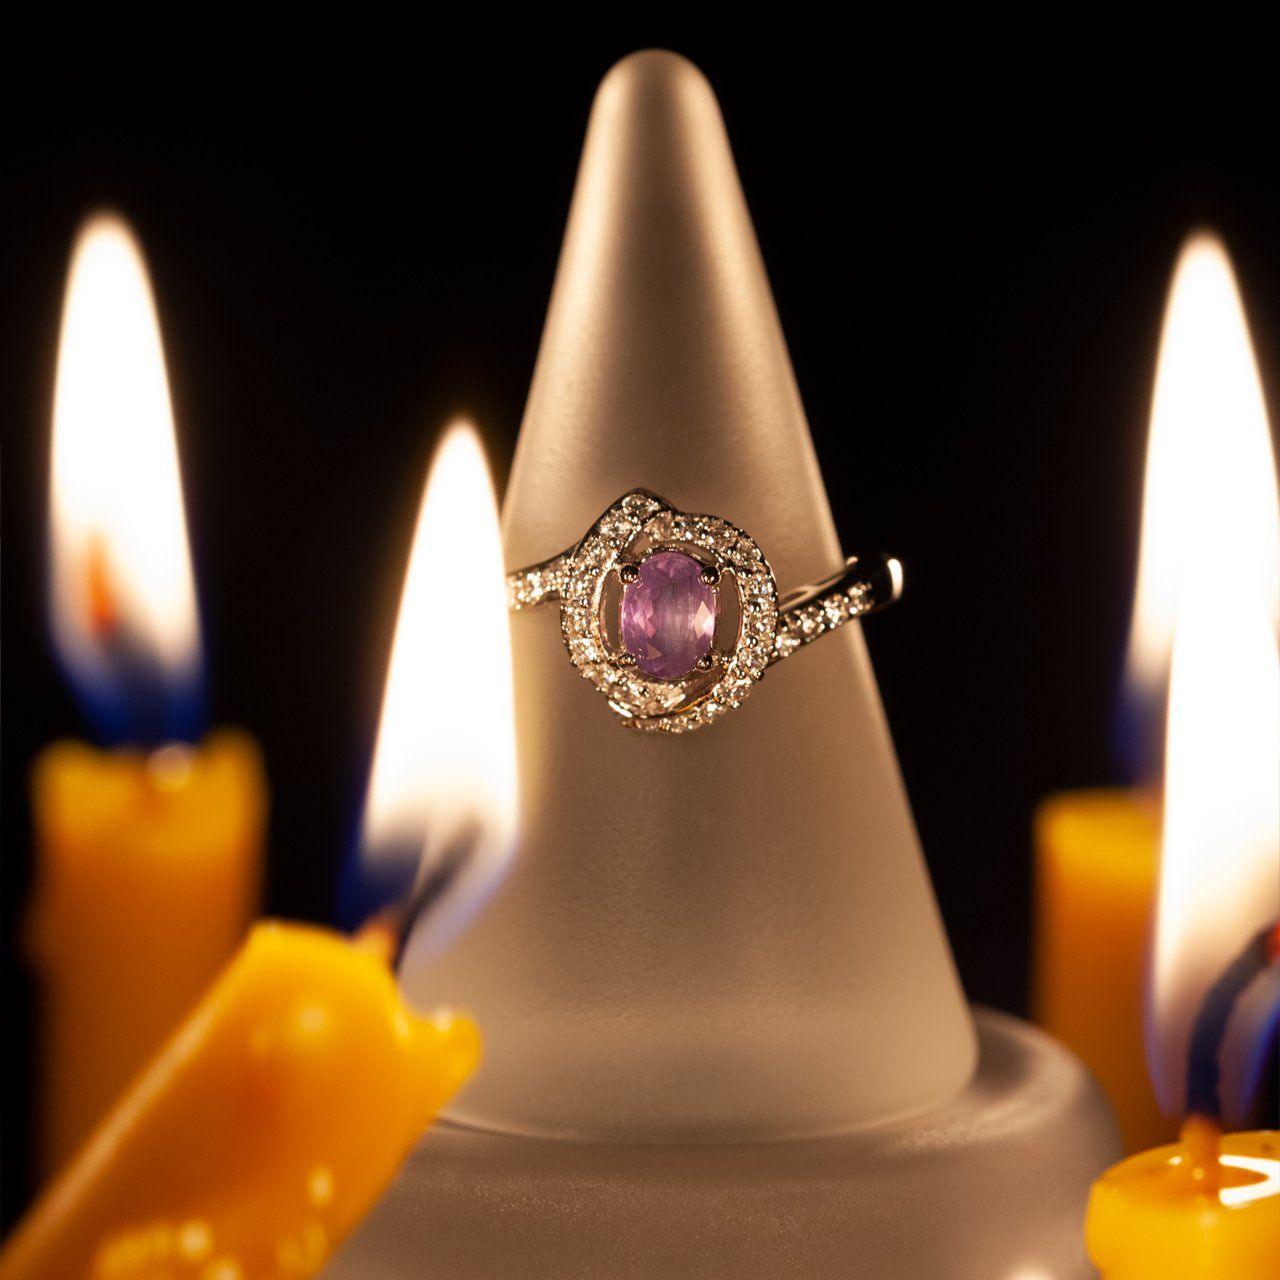 June Birthstone! $5000 Brilliant Natural Alexandrite Diamond 18k White Gold Engagement Ring - The Alexandrite